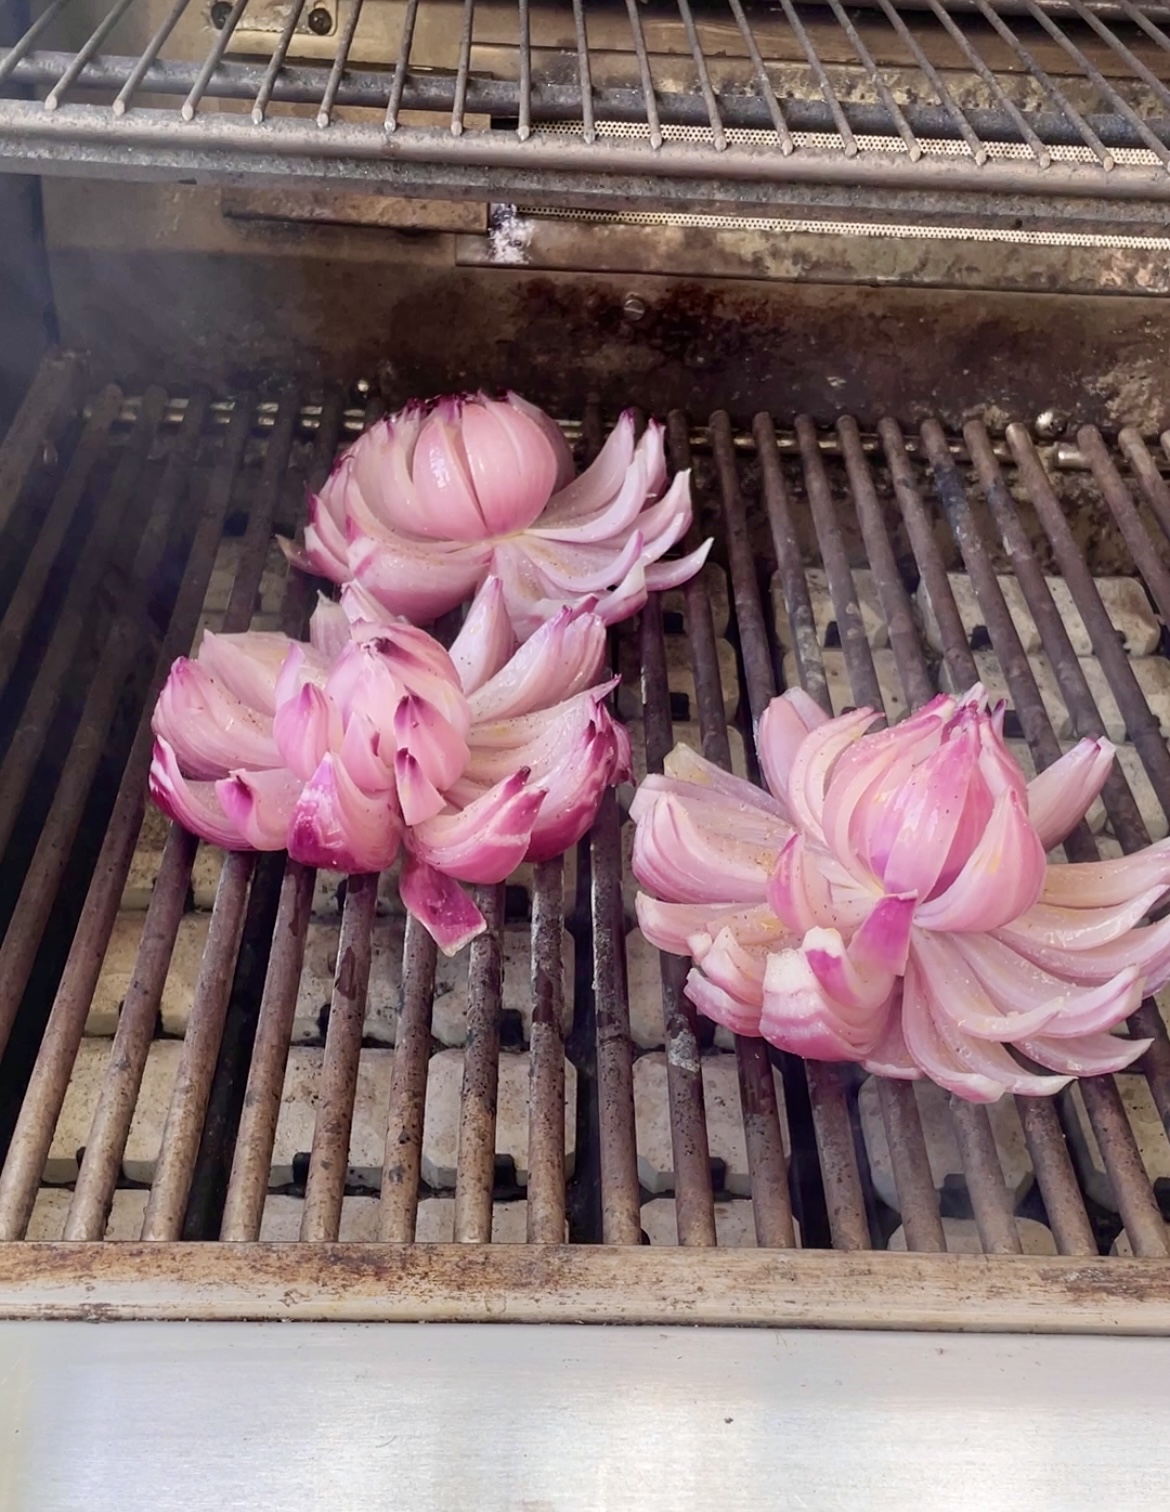 Grilled Blooming Onions Recipe - Pamela Salzman